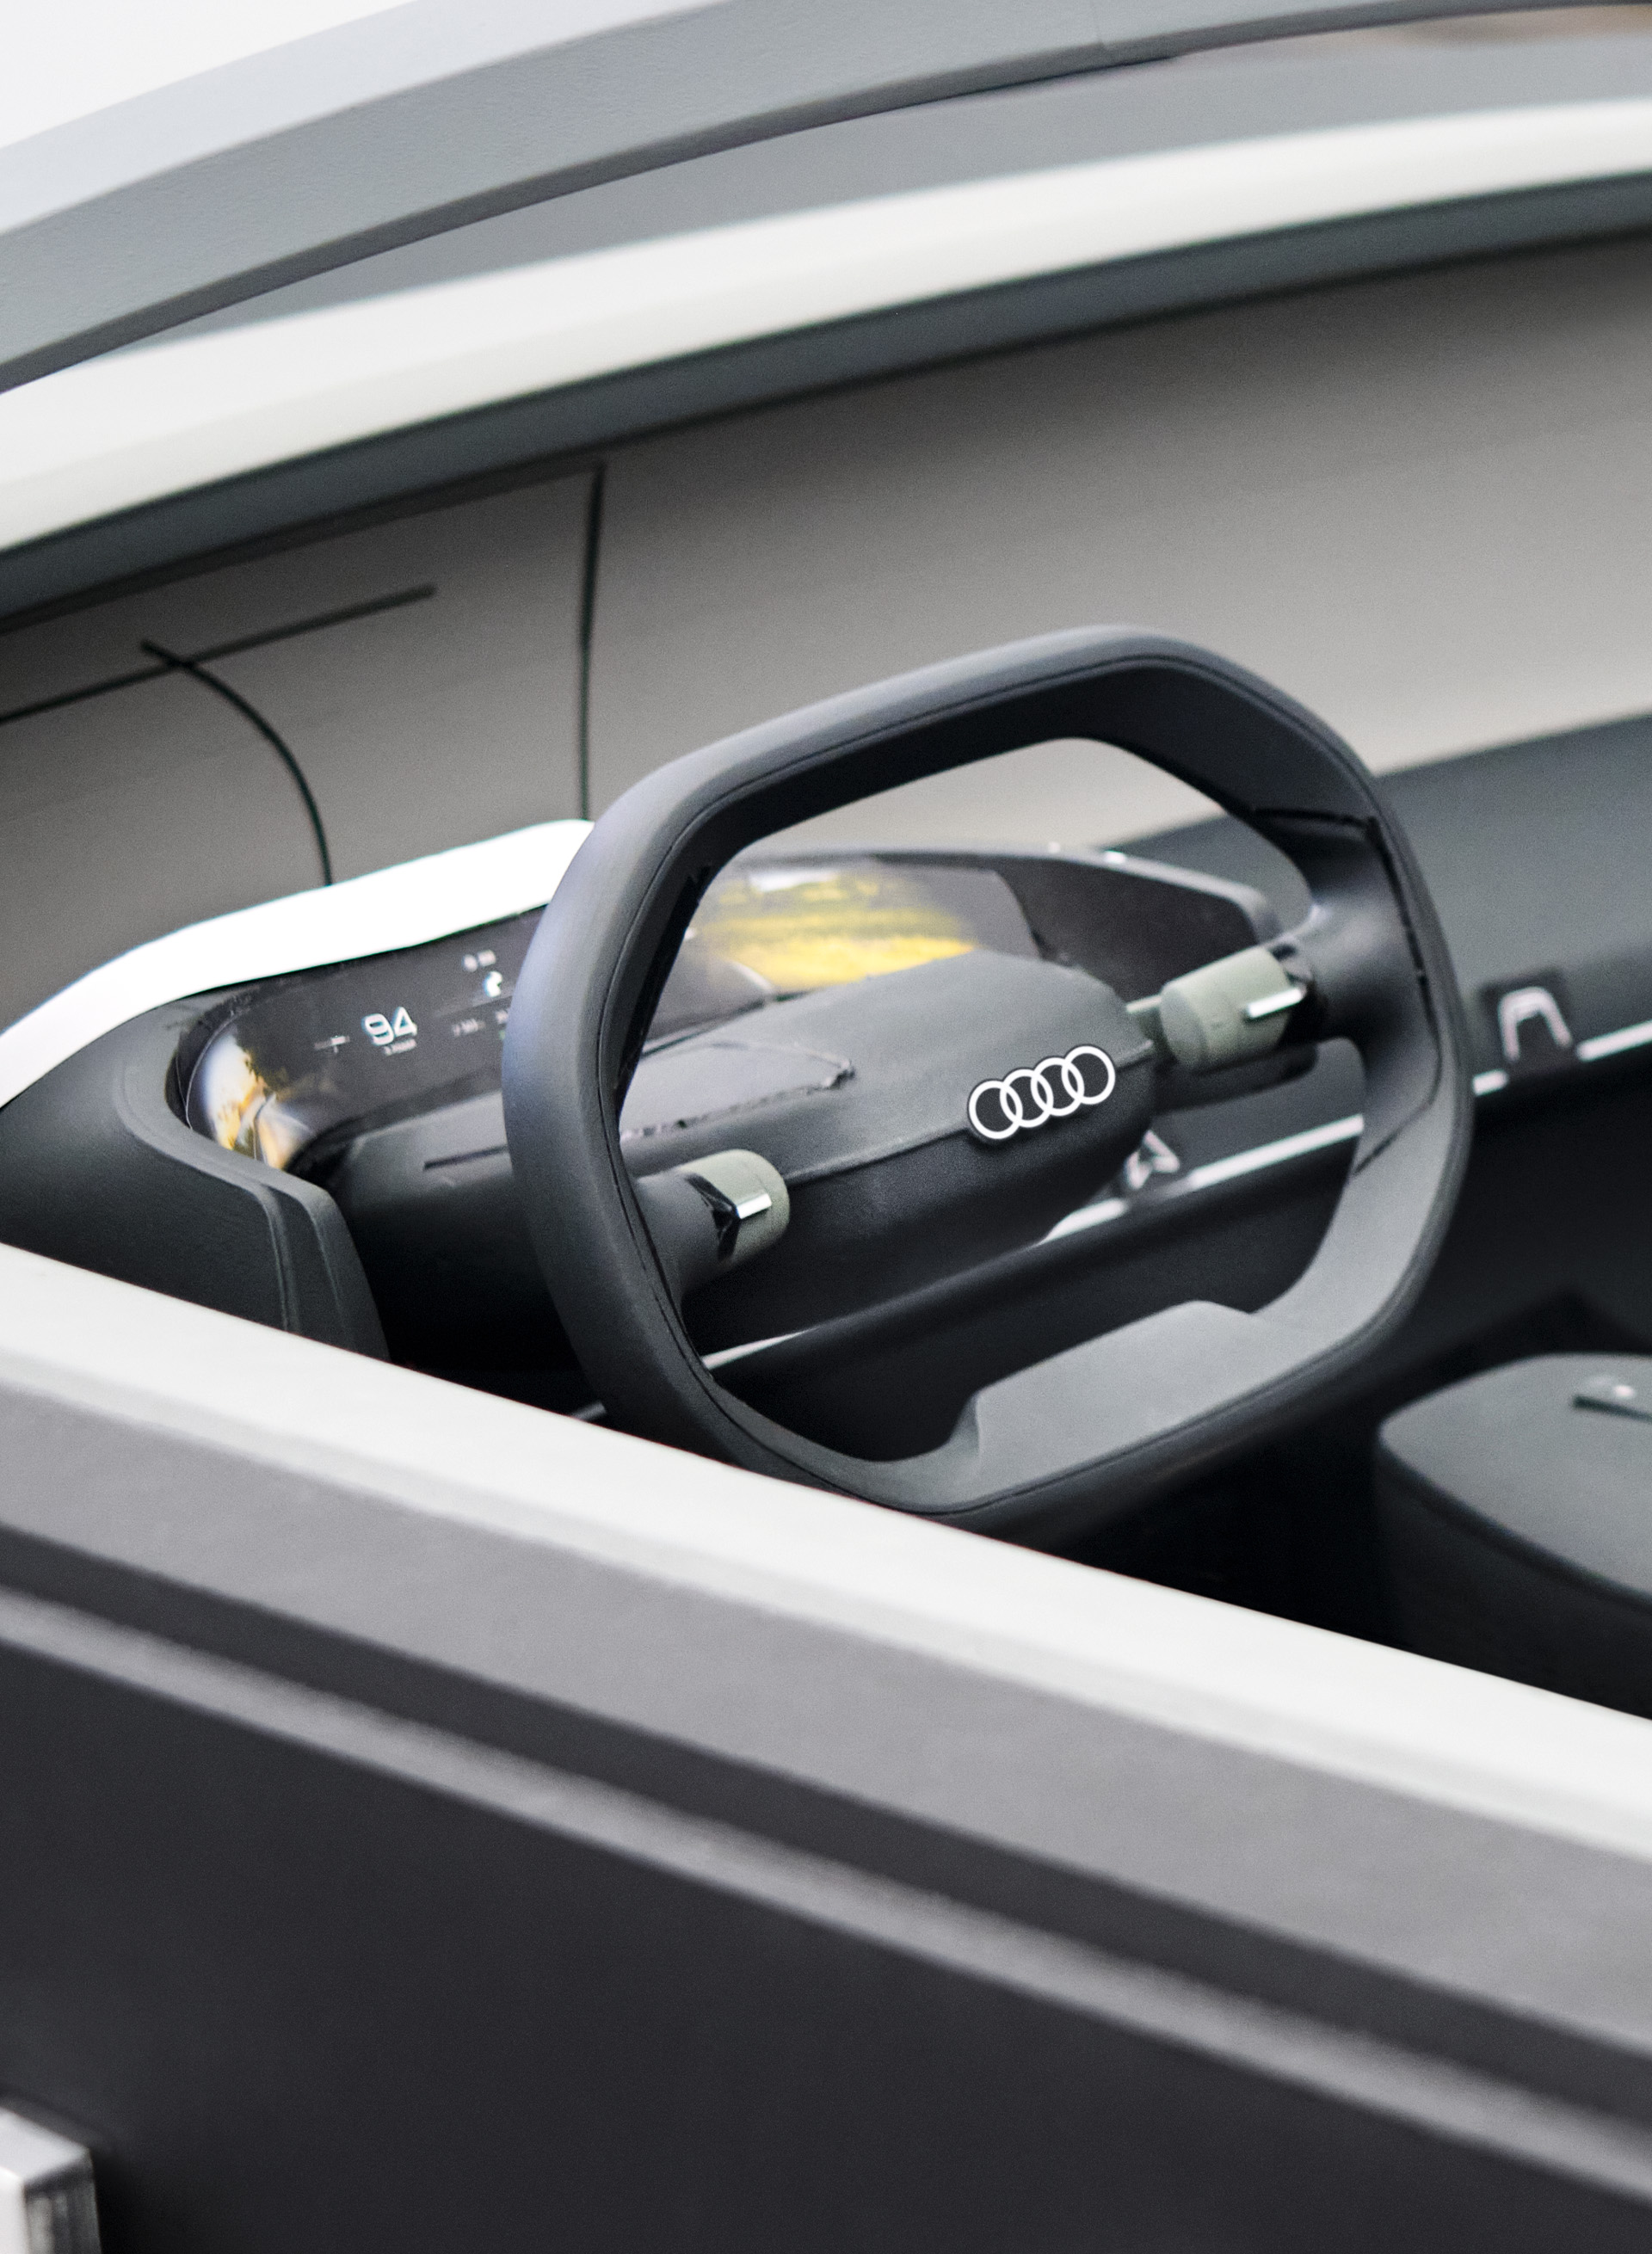 Lenkrad des Audi grandsphere concept im Konzeptzustand.